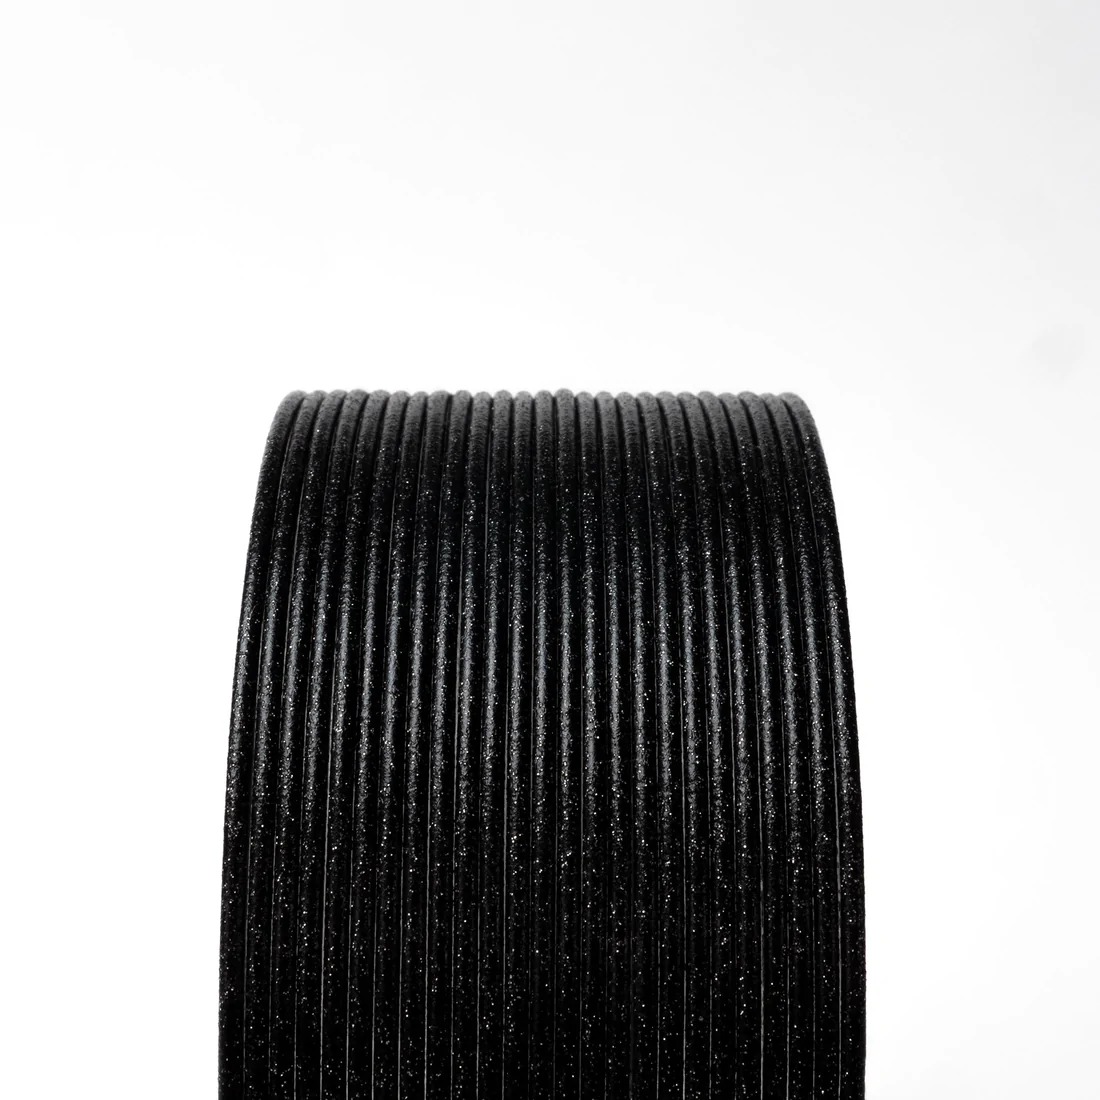 Empire Strikes Metallic Black HTPLA  2.85mm 3D printing filament